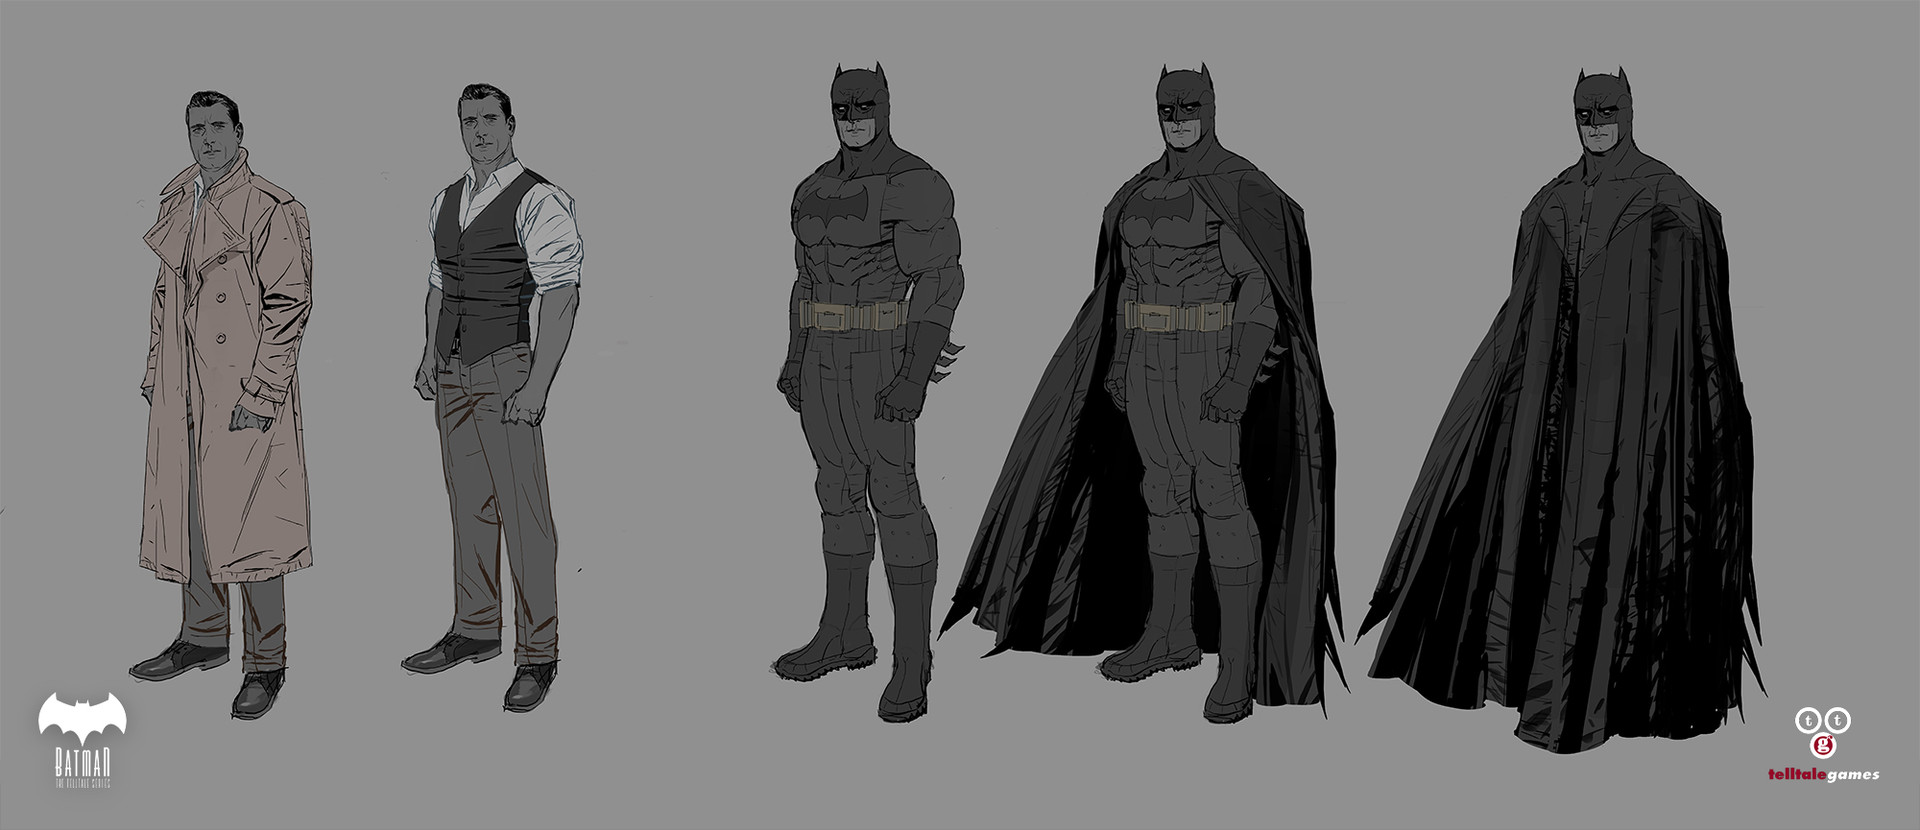 ArtStation - Batman & Bruce Wayne concepts